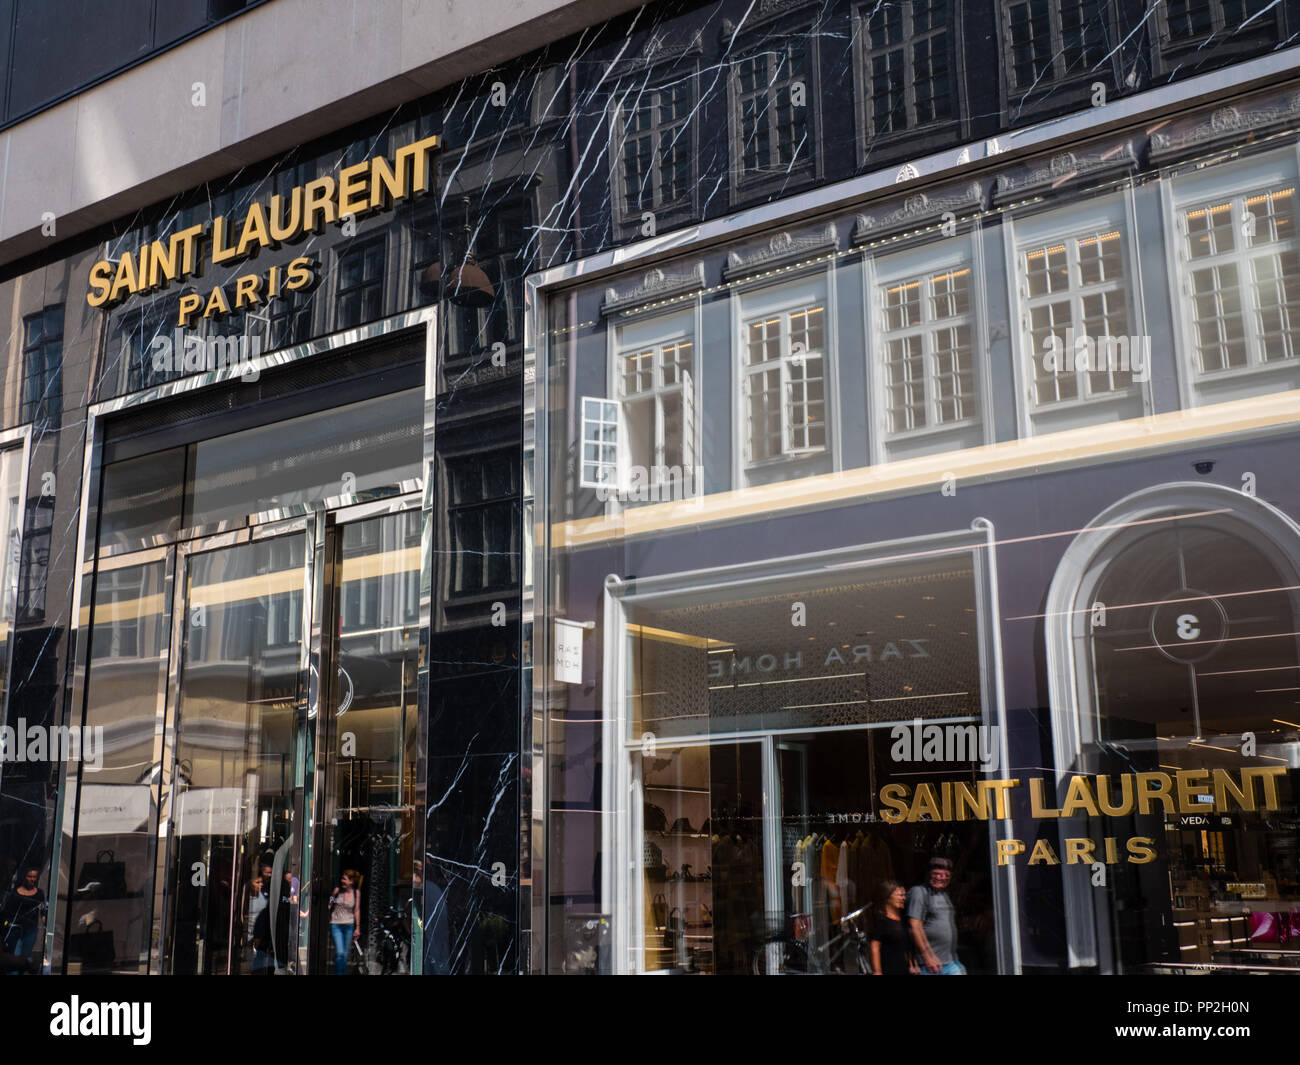 Saint Laurent Paris, Luxury Shop, Copenhagen, Zealand, Denmark, Europe ...